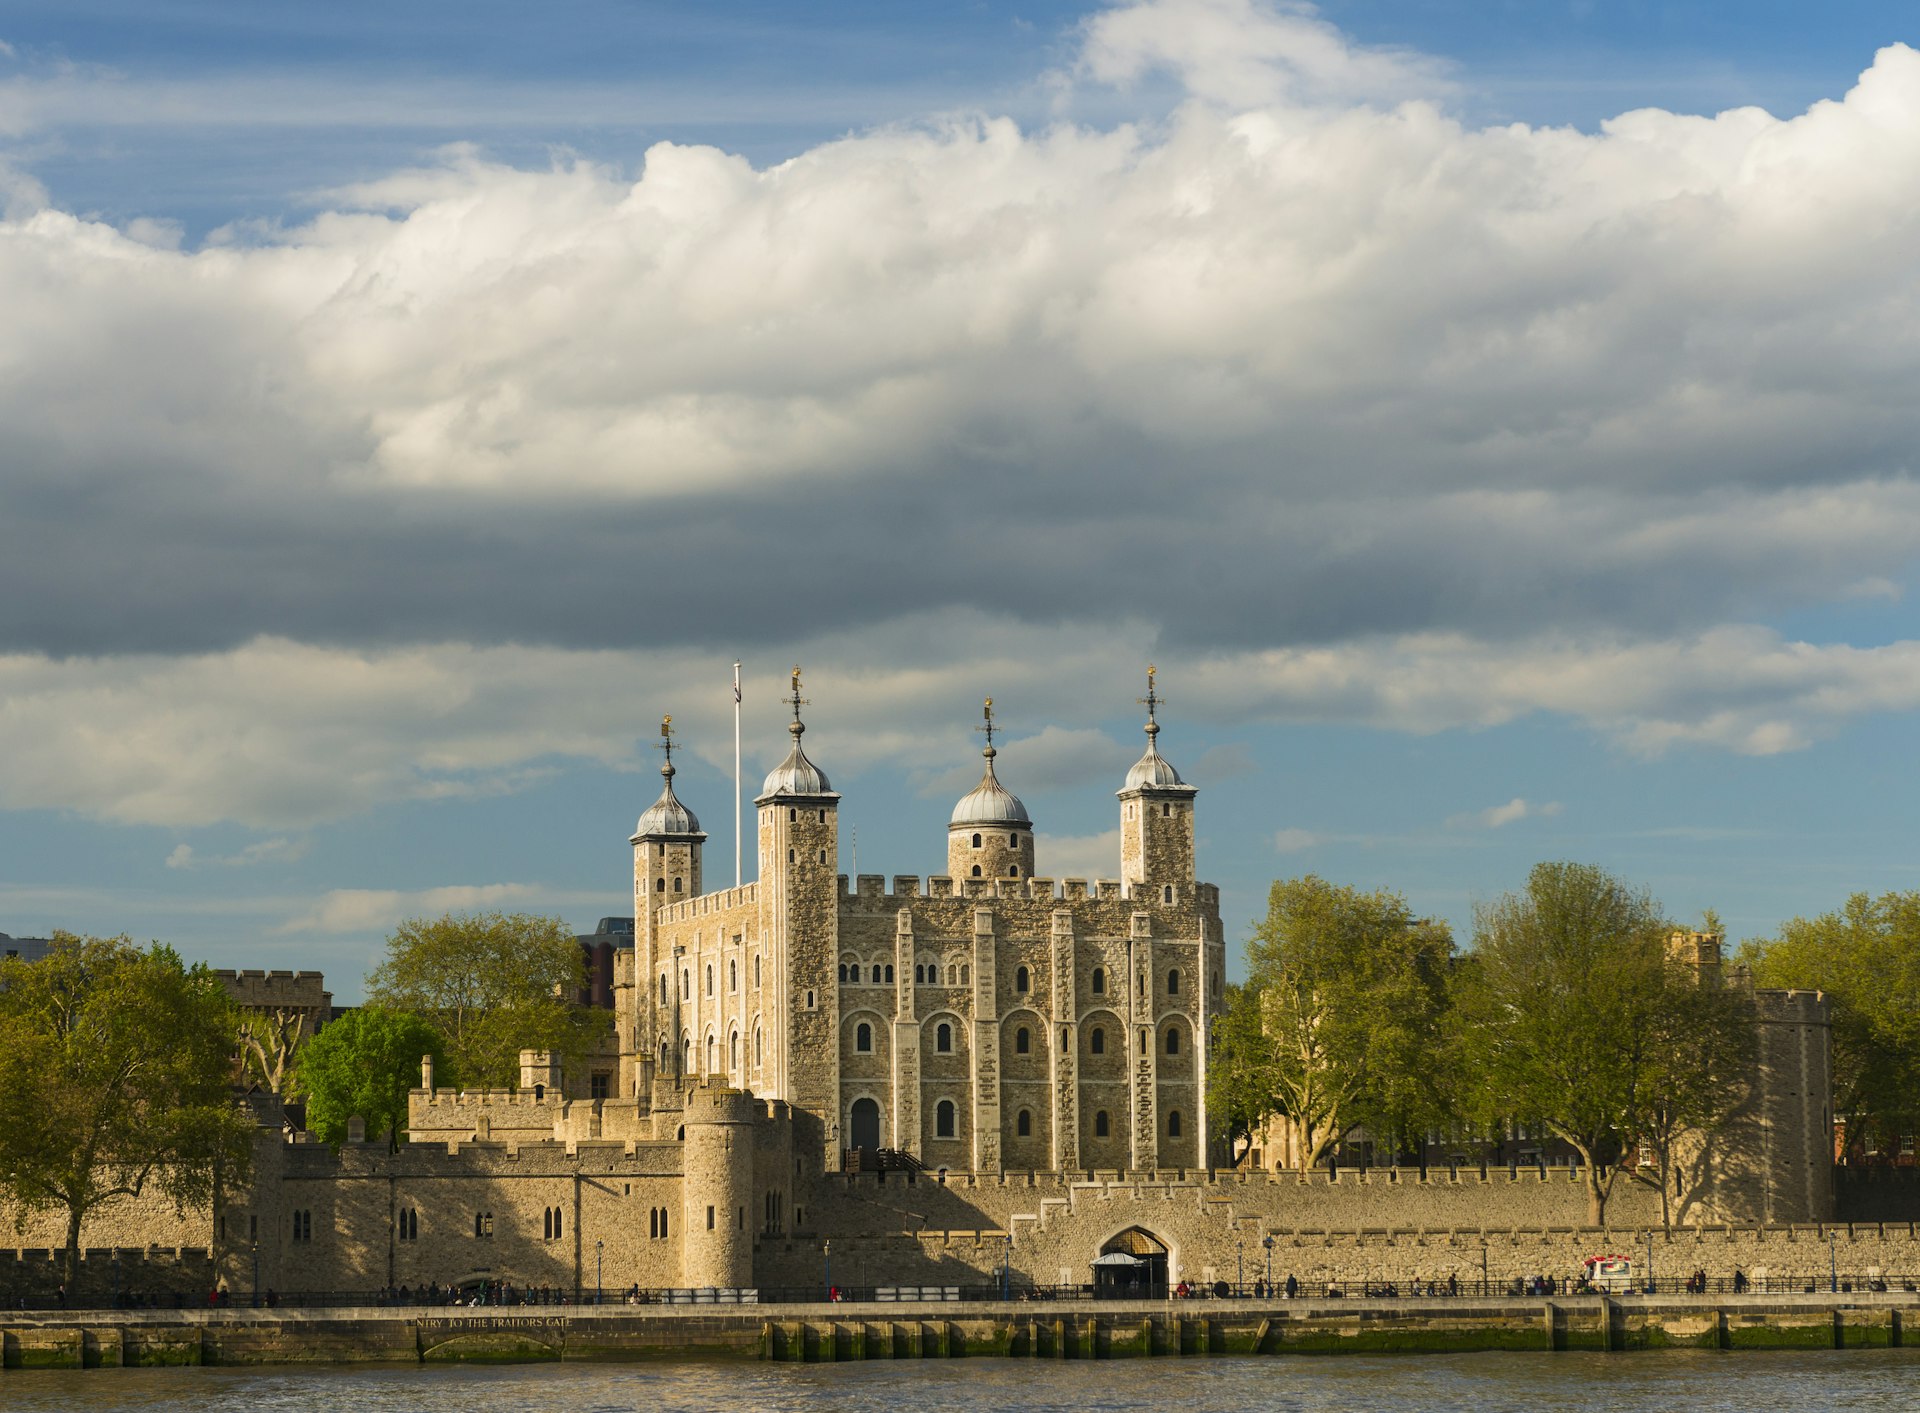 UK, England, London, Tower of London